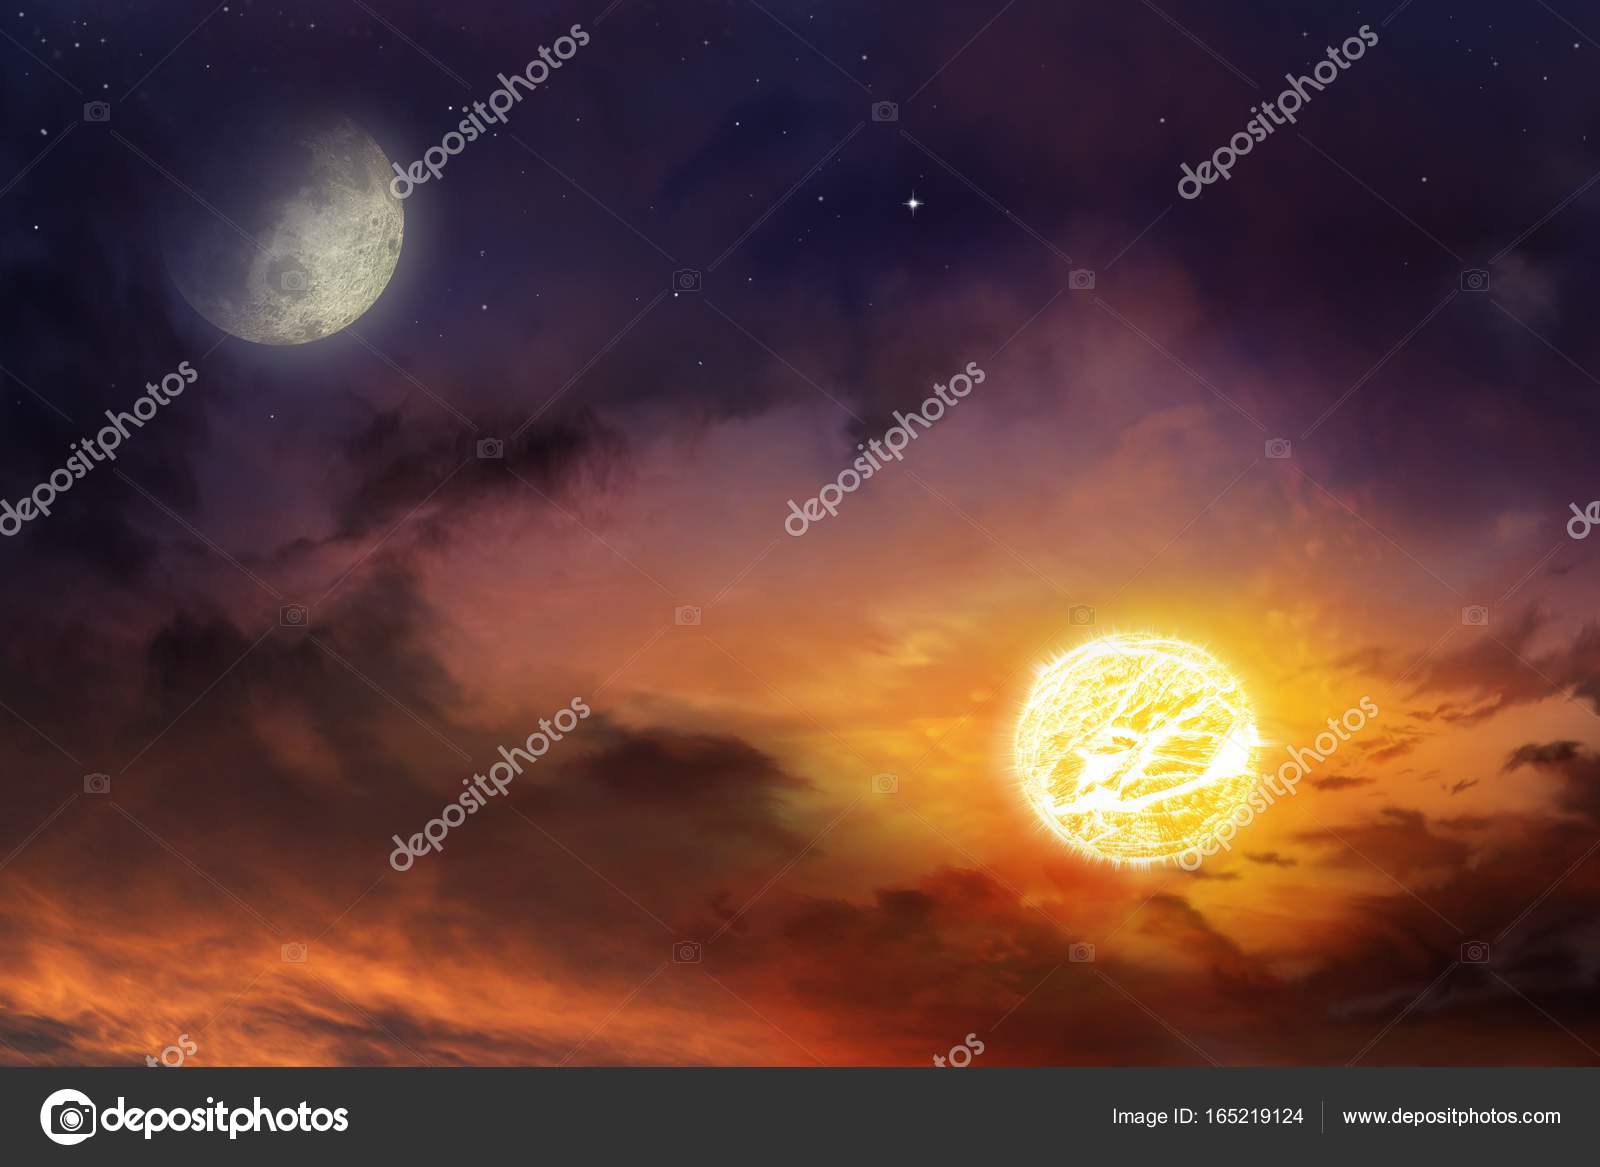 https://st3.depositphotos.com/4799975/16521/i/1600/depositphotos_165219124-stock-photo-sun-in-space-moon-sun.jpg